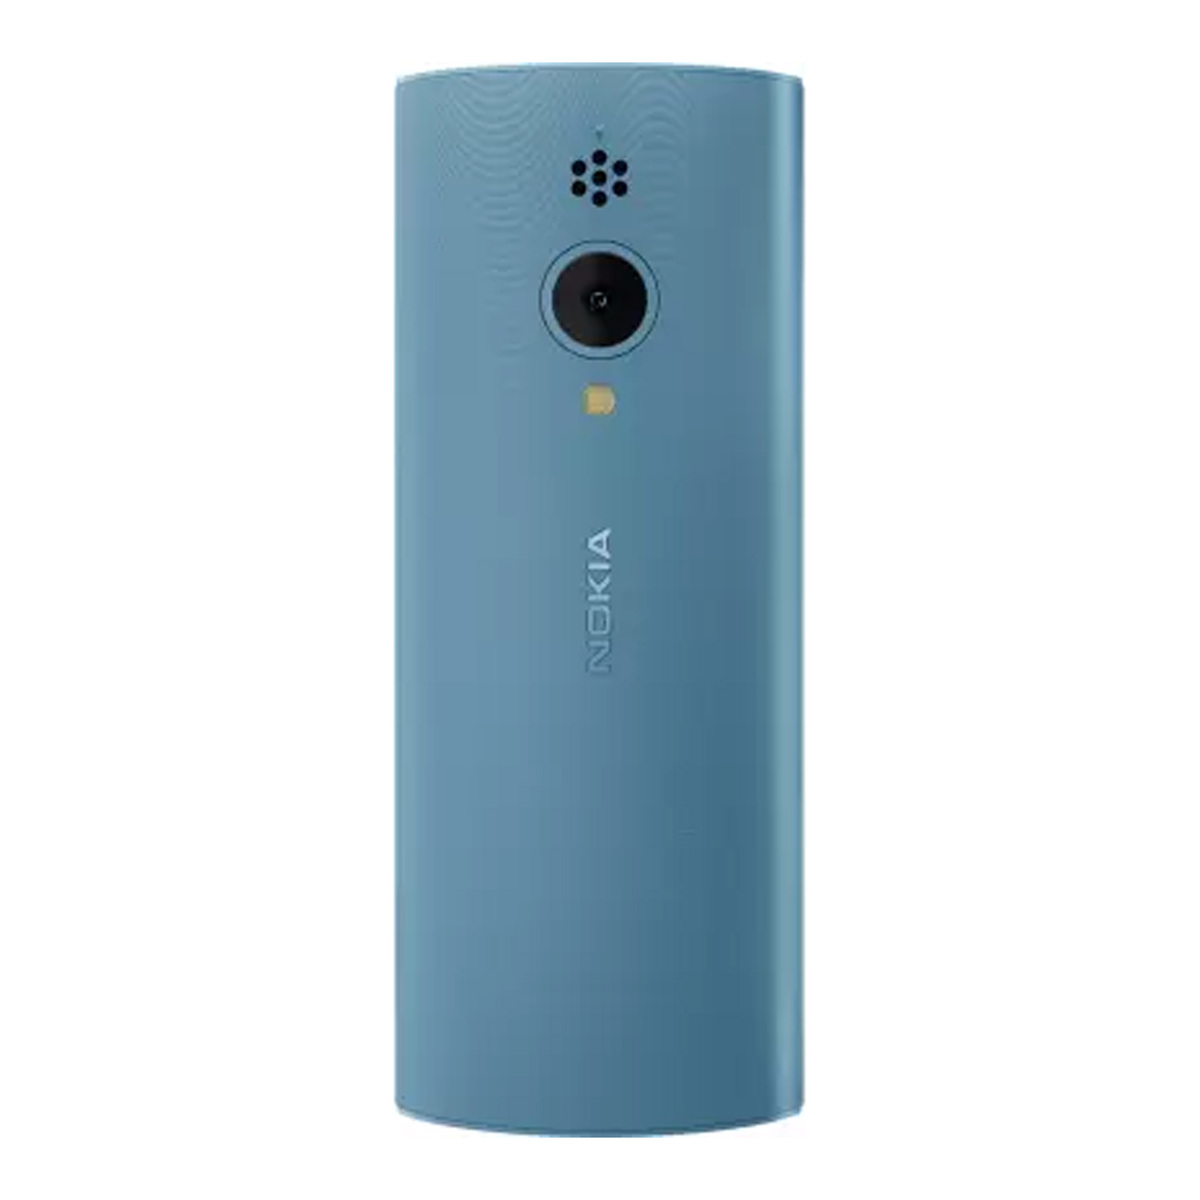 Nokia 150 Dual Sim Feature Phone, Blue, TA1582